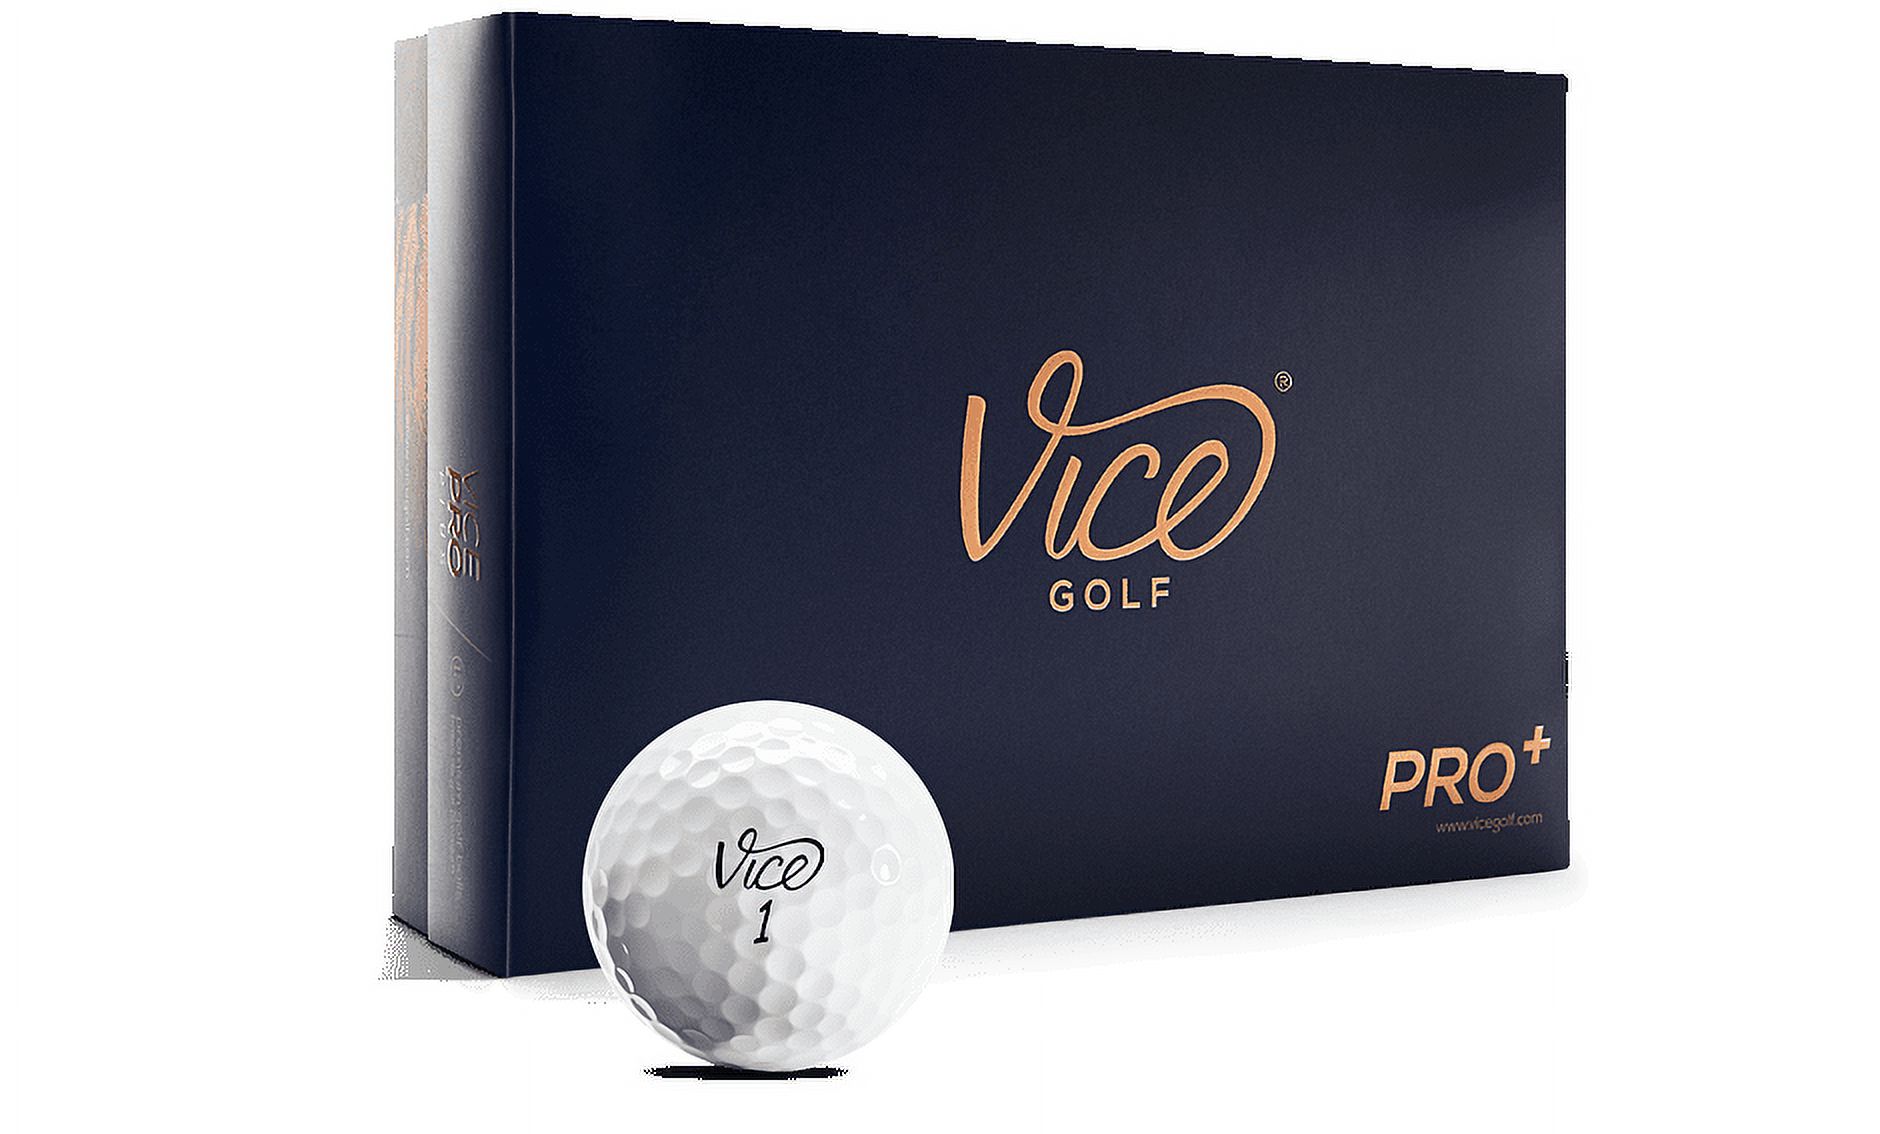 Vice Pro Plus White Golf Balls, 12 Pack - image 1 of 2